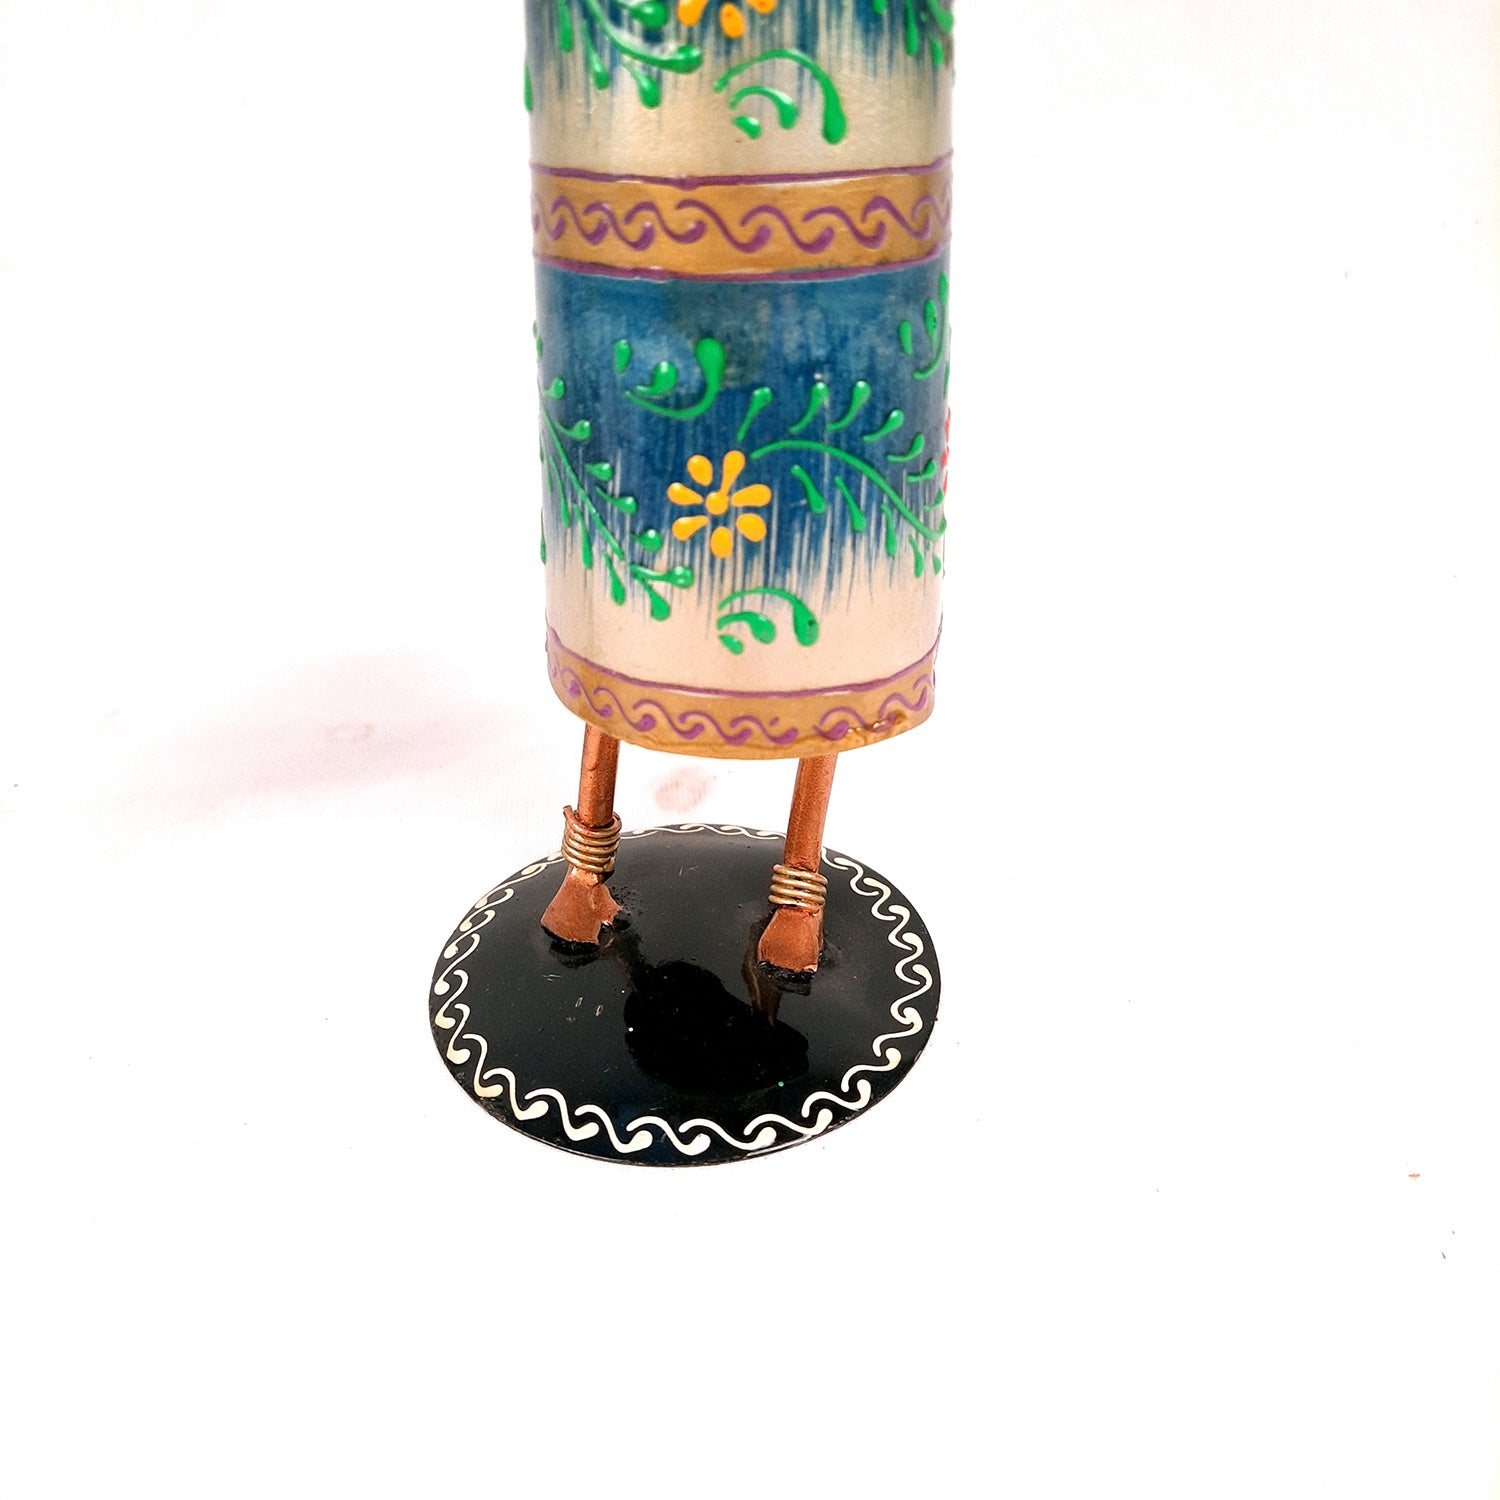 Showpiece Figurines Cum Tea Light Holders - Tribal Worker Design | Decorative Showpieces - for Home, Bedroom, Living Room, Office Desk, Table Decor & Gifts - 15 Inch (Set of 2) - Apkamart